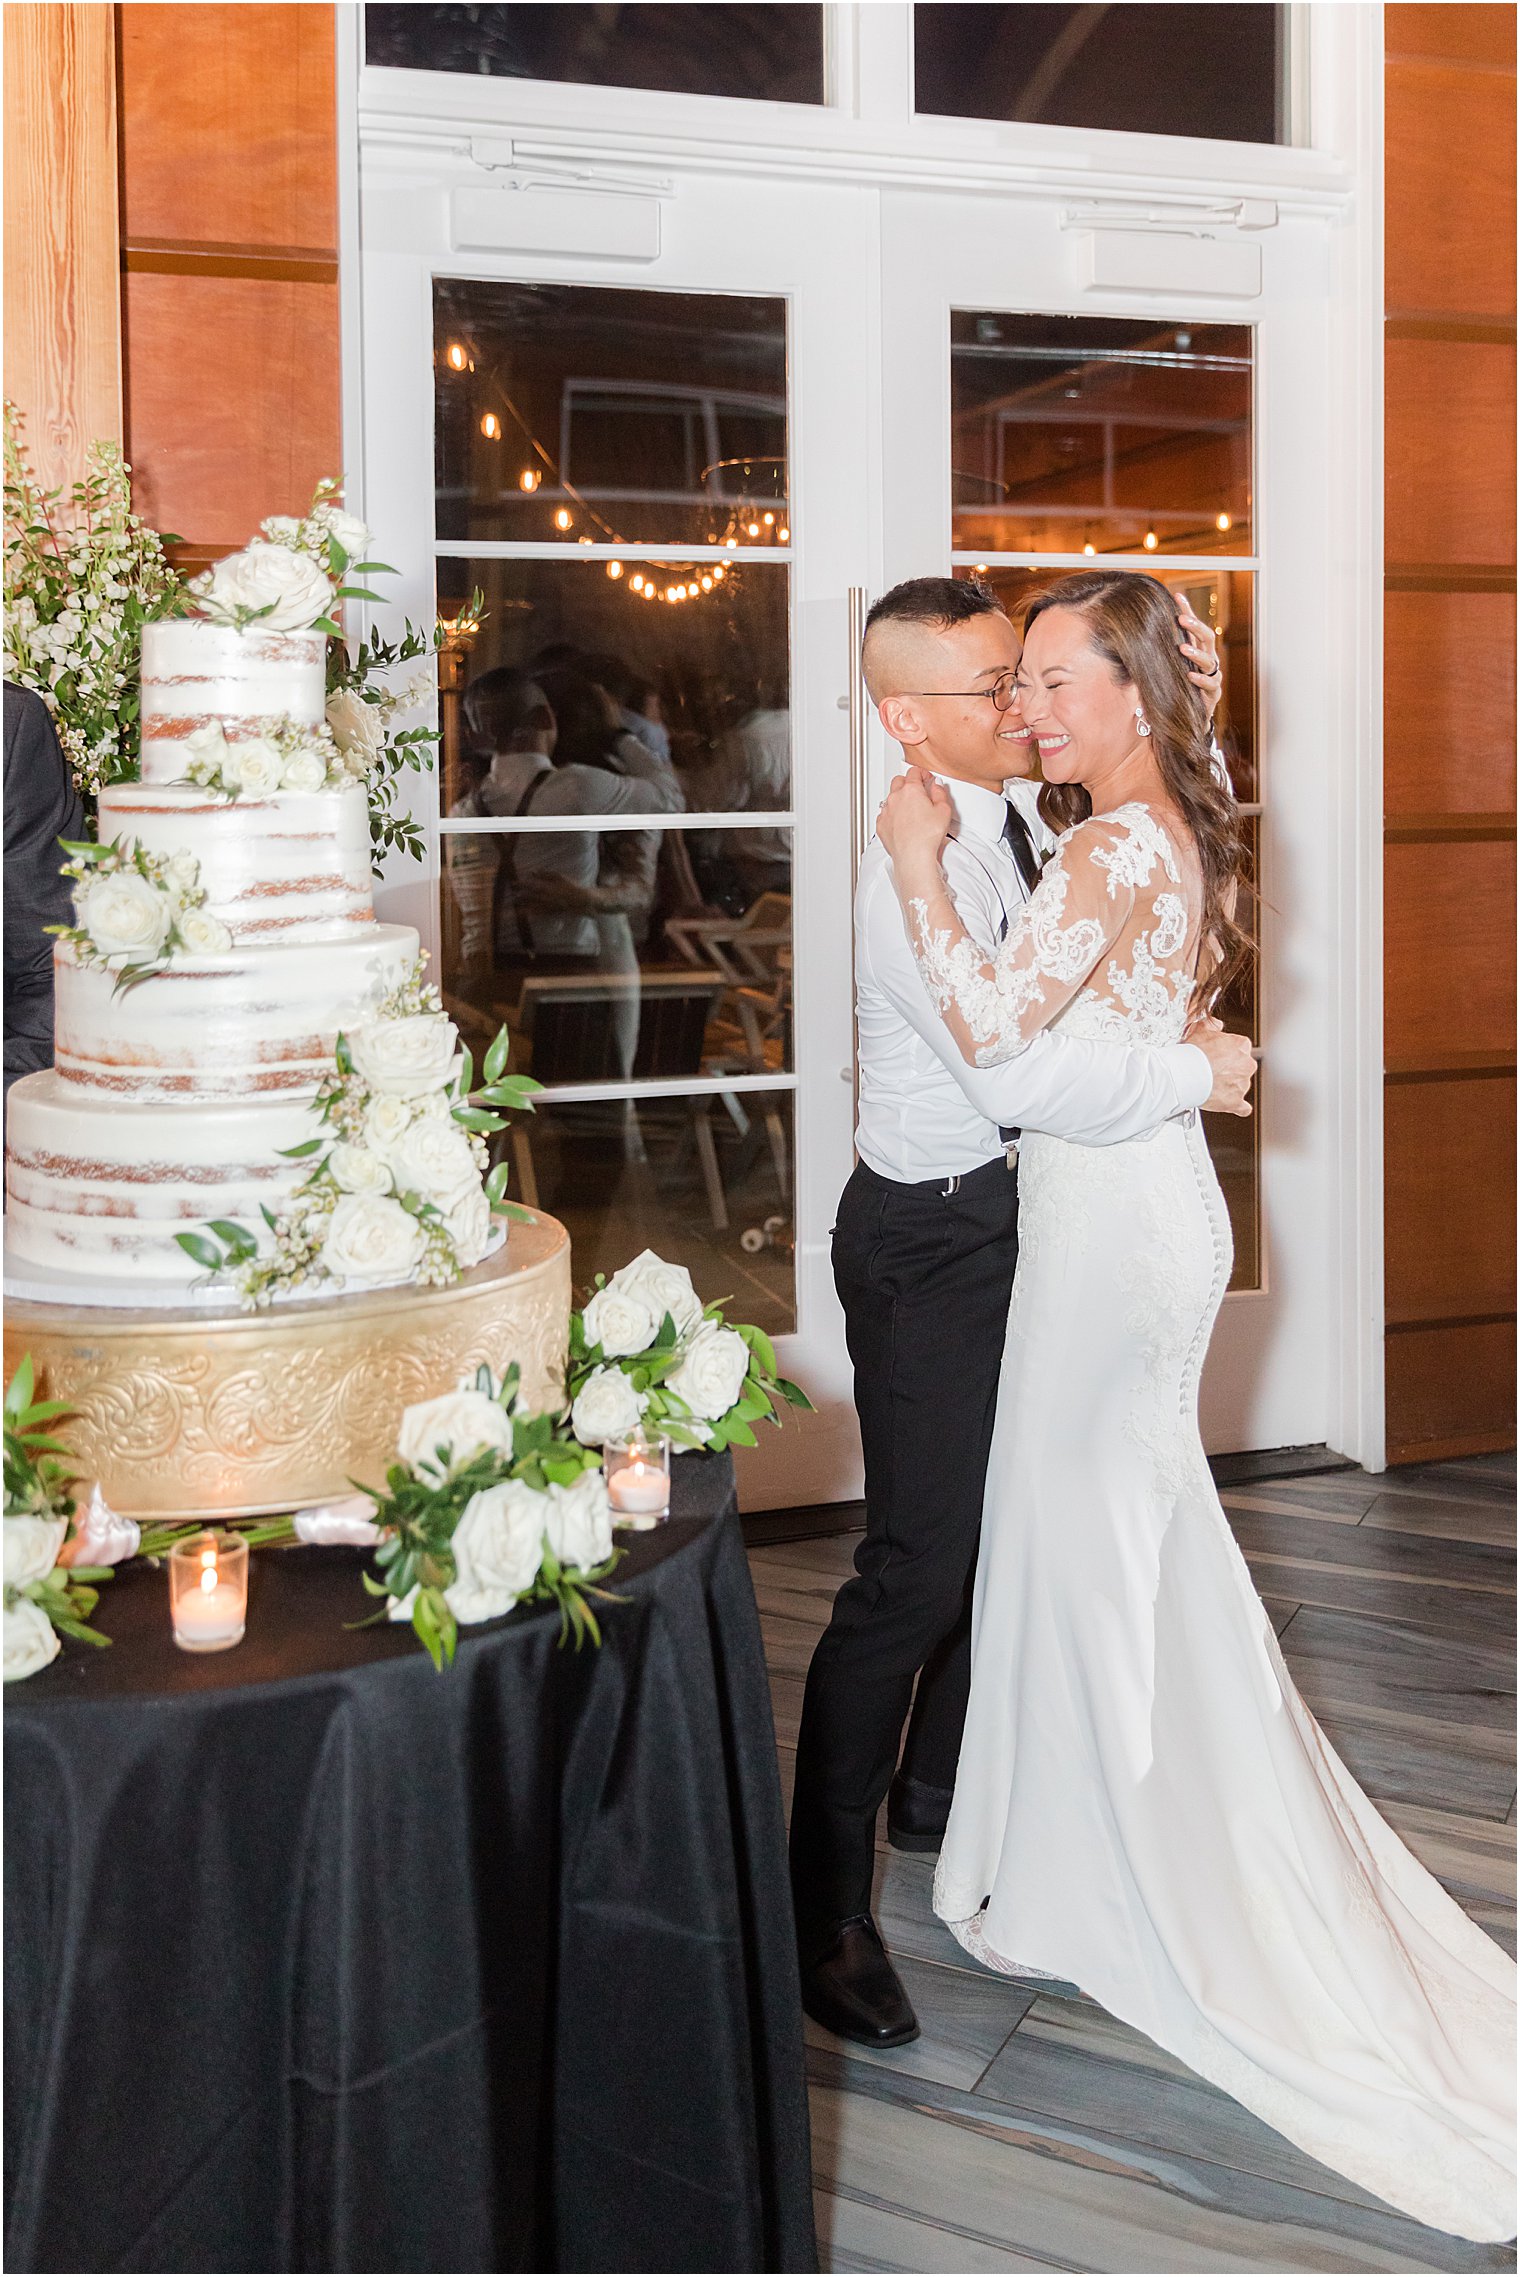 couple cuts wedding cake at wedding reception